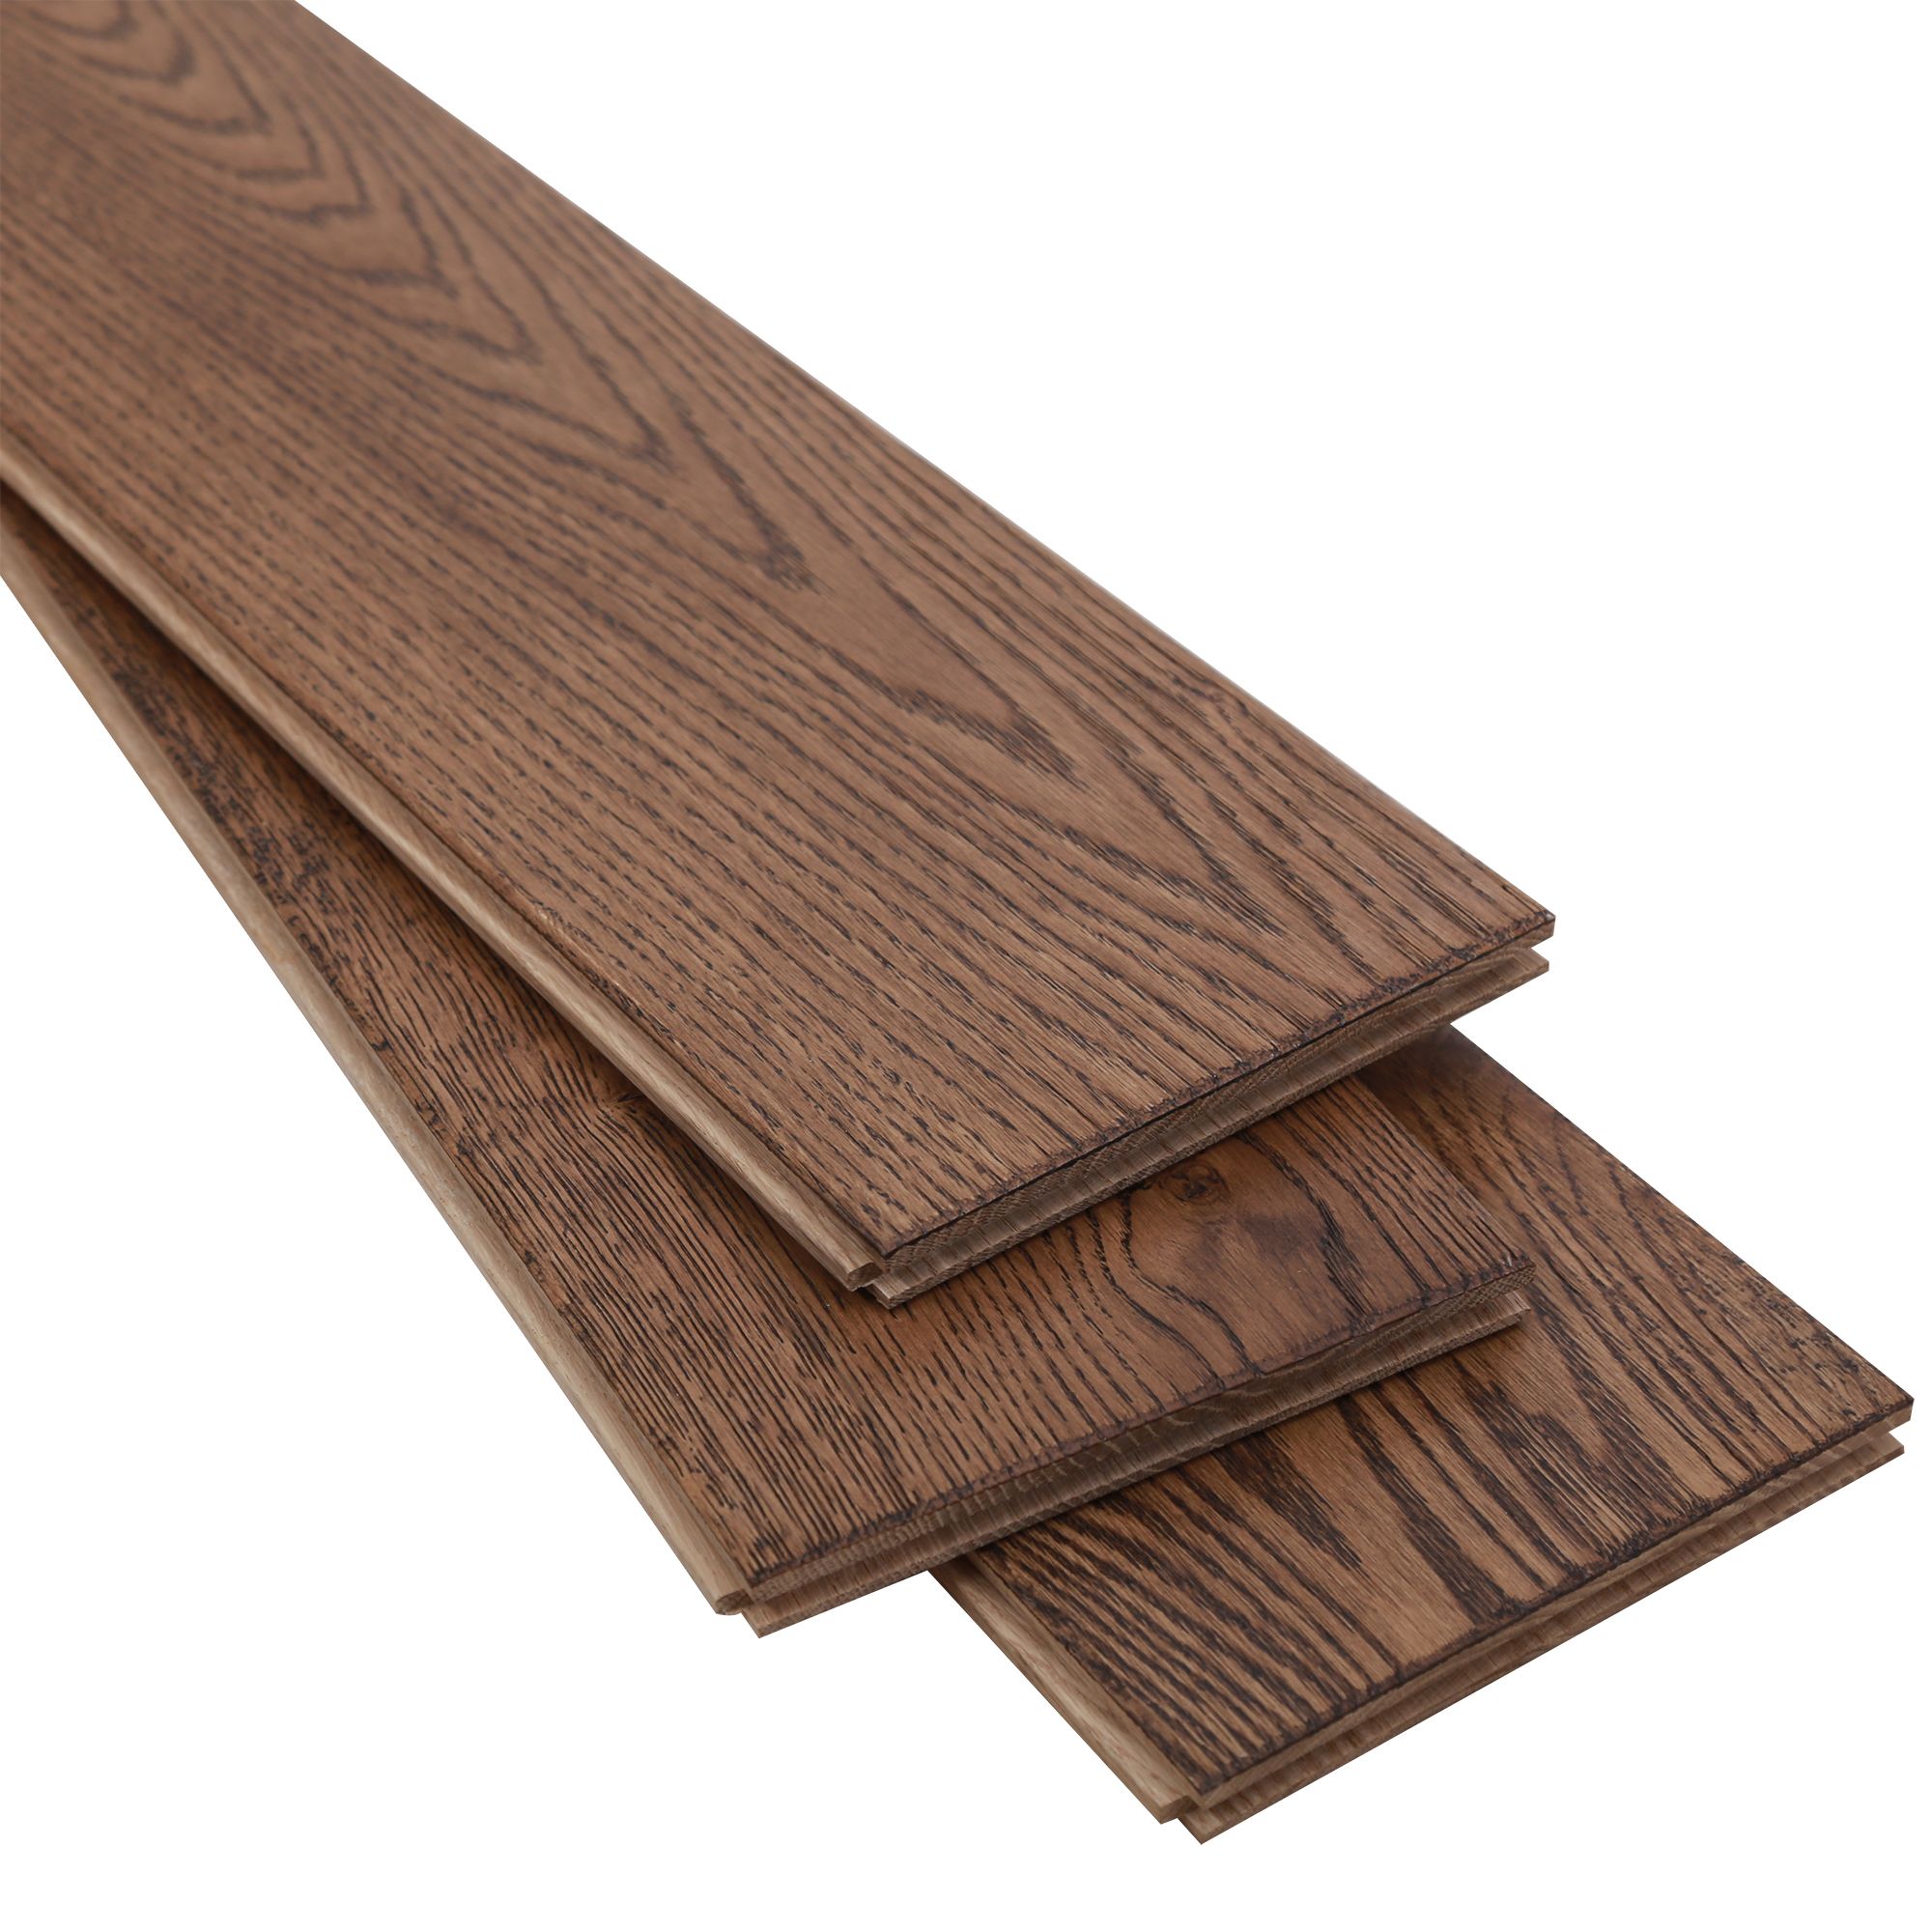 GoodHome Skanor Dark Brown Oak effect Oak Solid wood flooring, 1.3m²